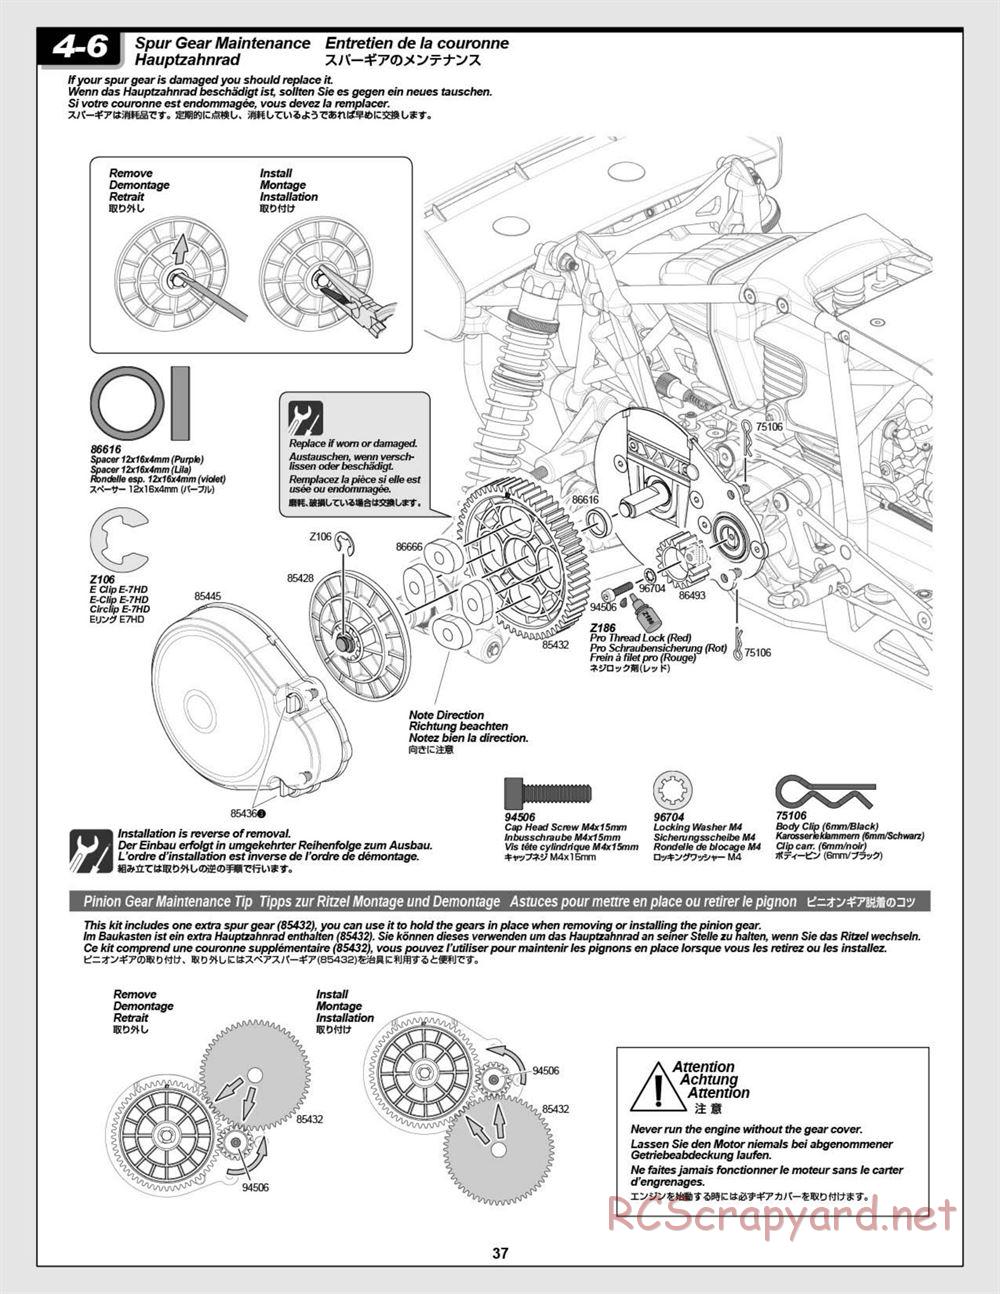 HPI - Baja 5B 2.0 RTR - Manual - Page 37